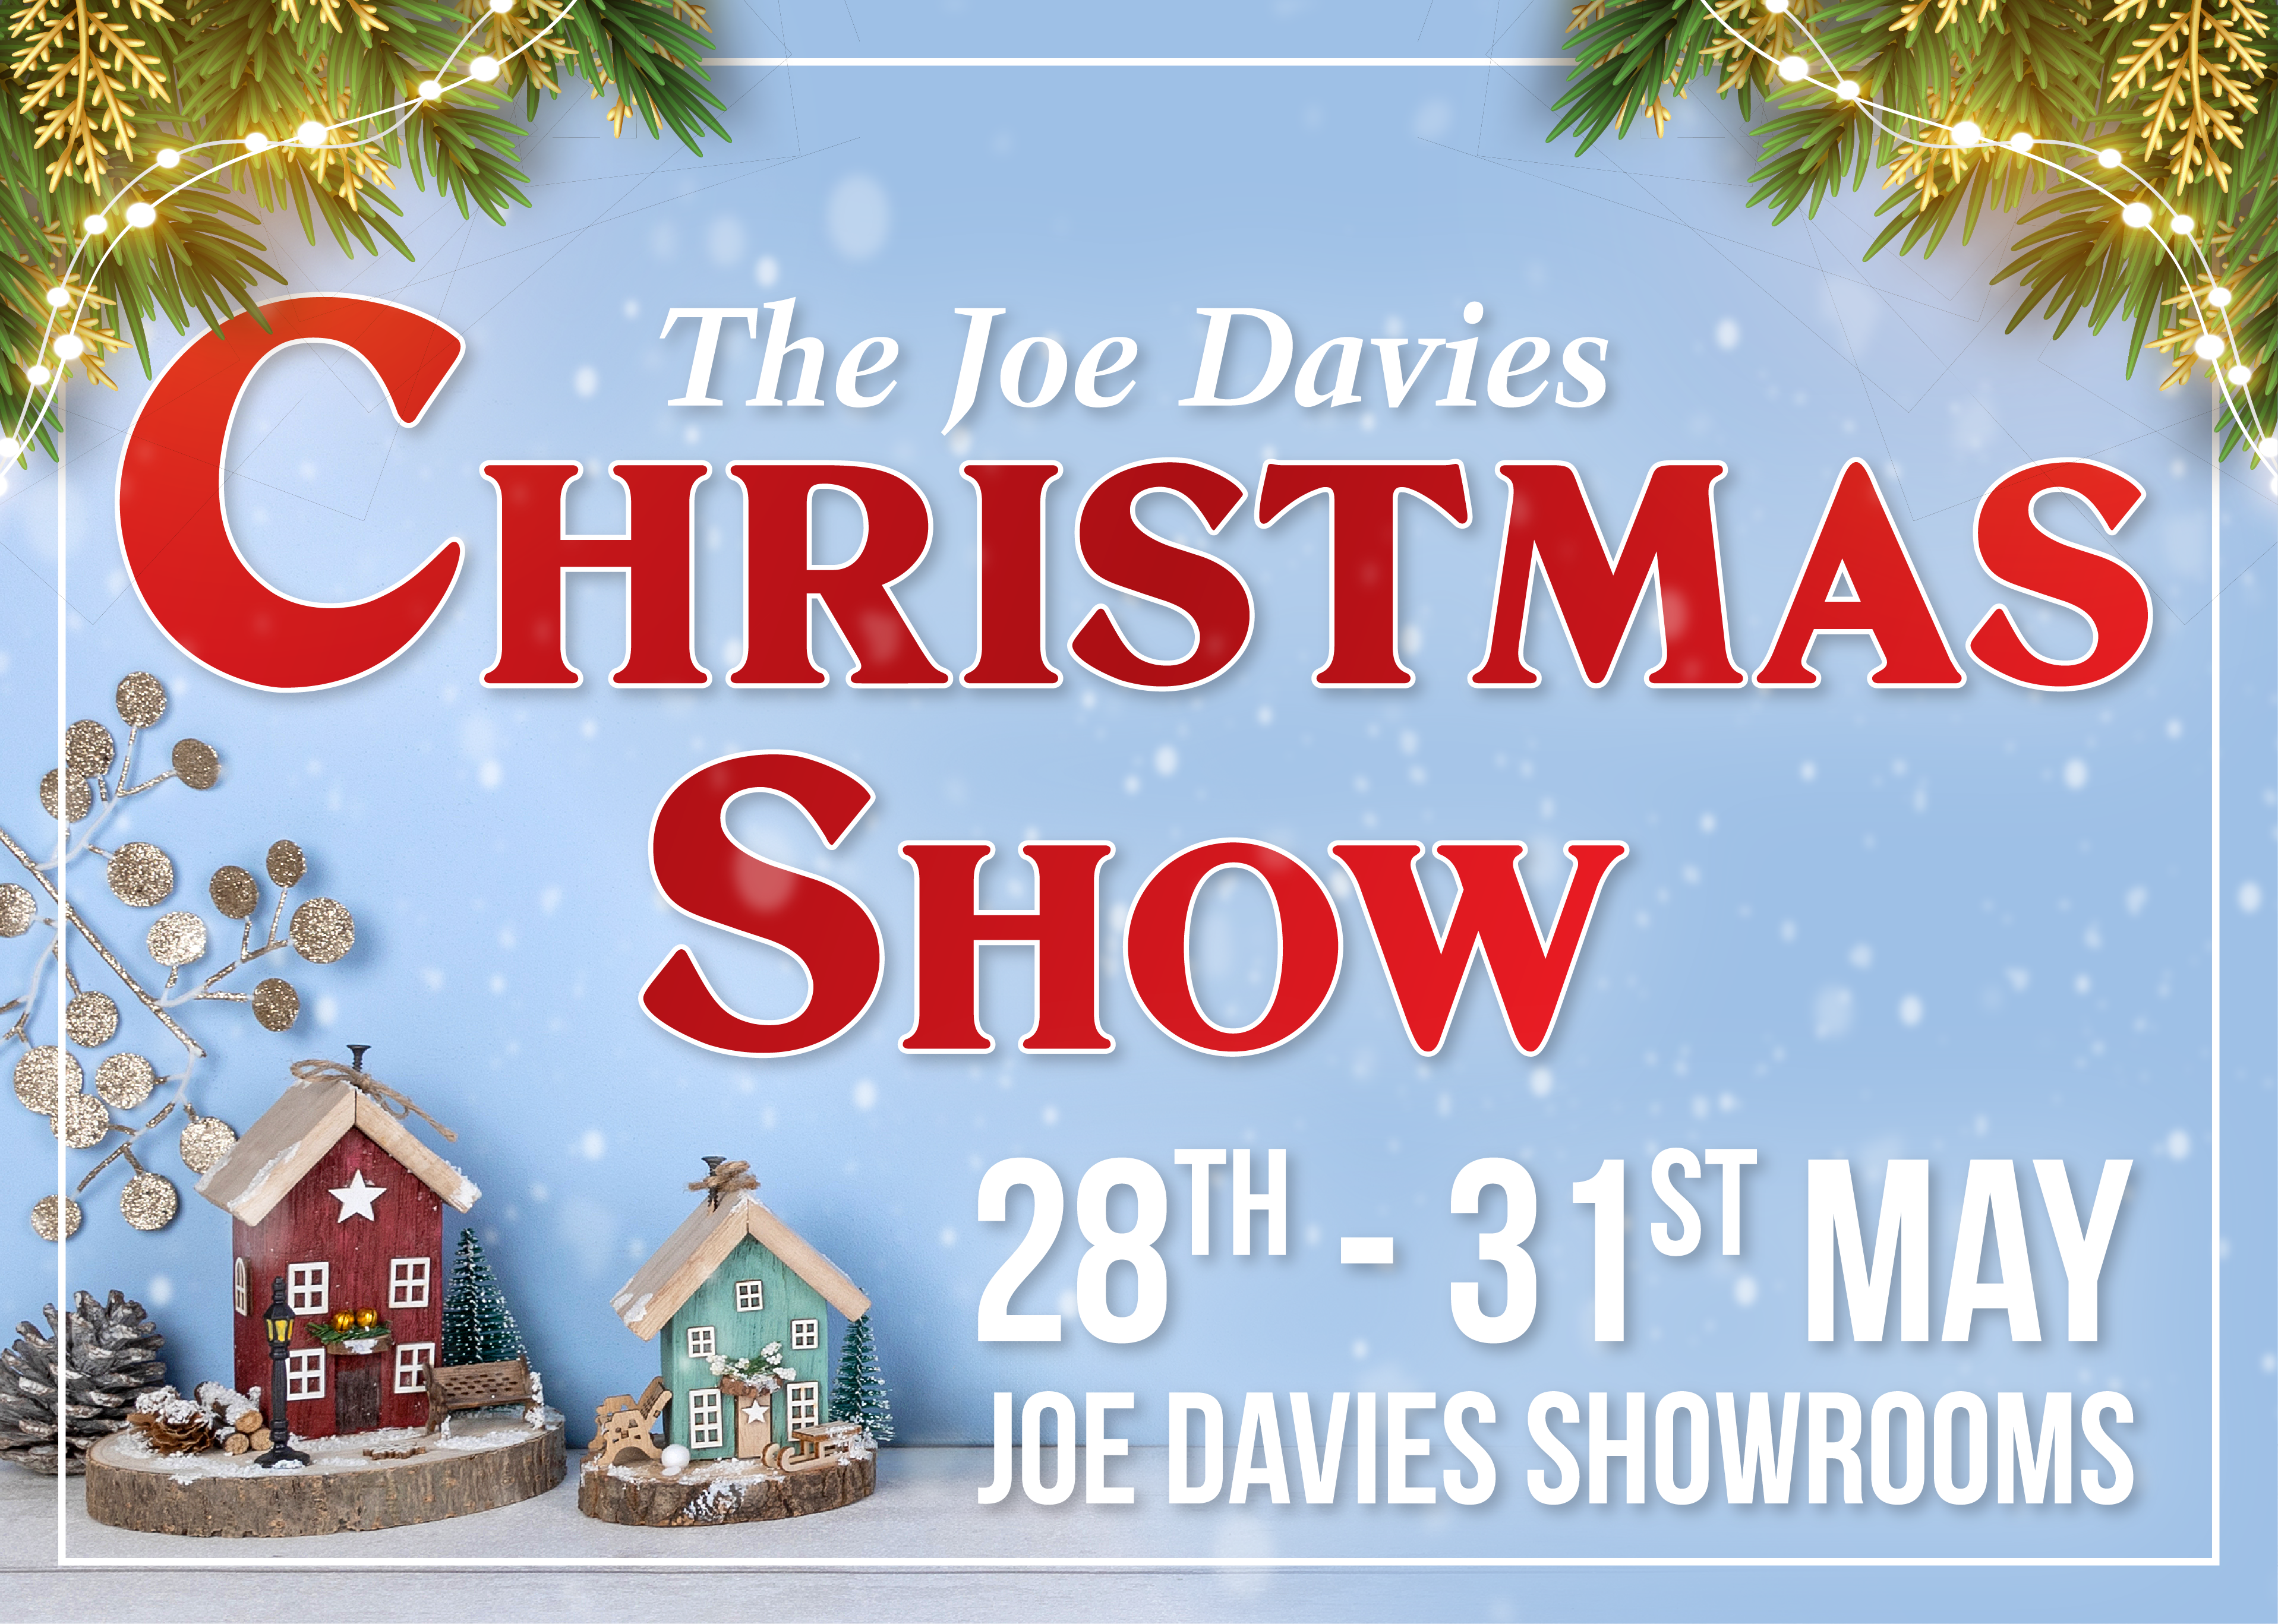 Joe Davies Christmas Show